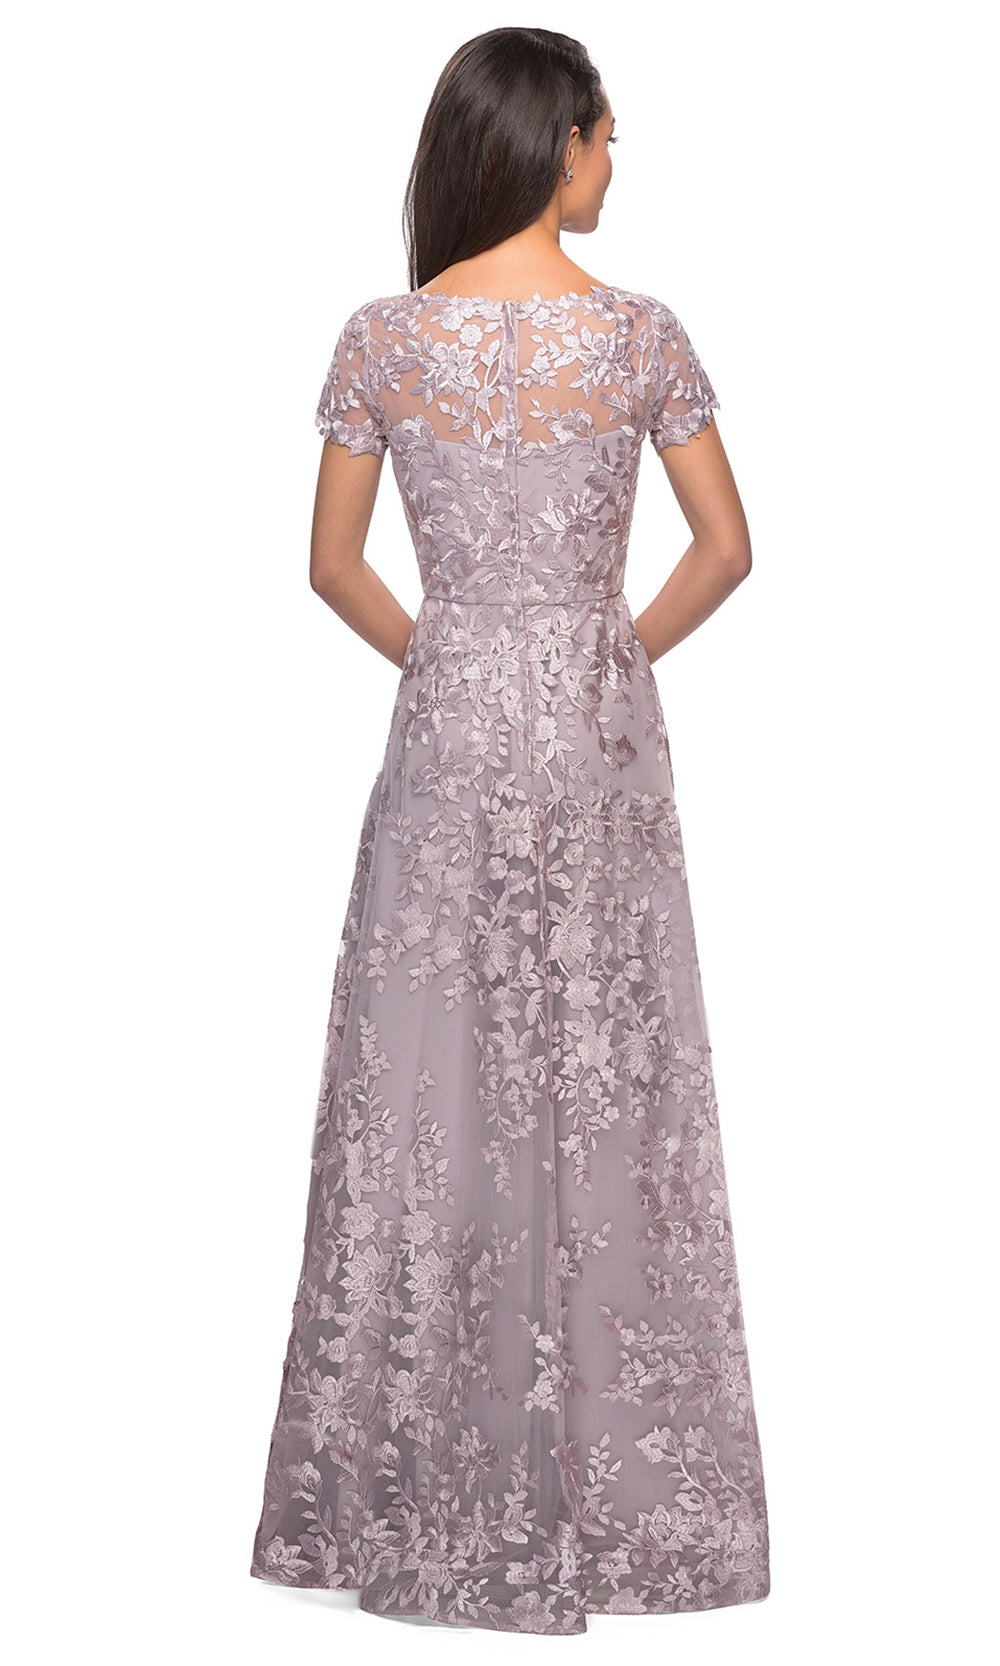 La Femme - 27870 Floral Lace Short Sleeve A-Line Dress In Pink